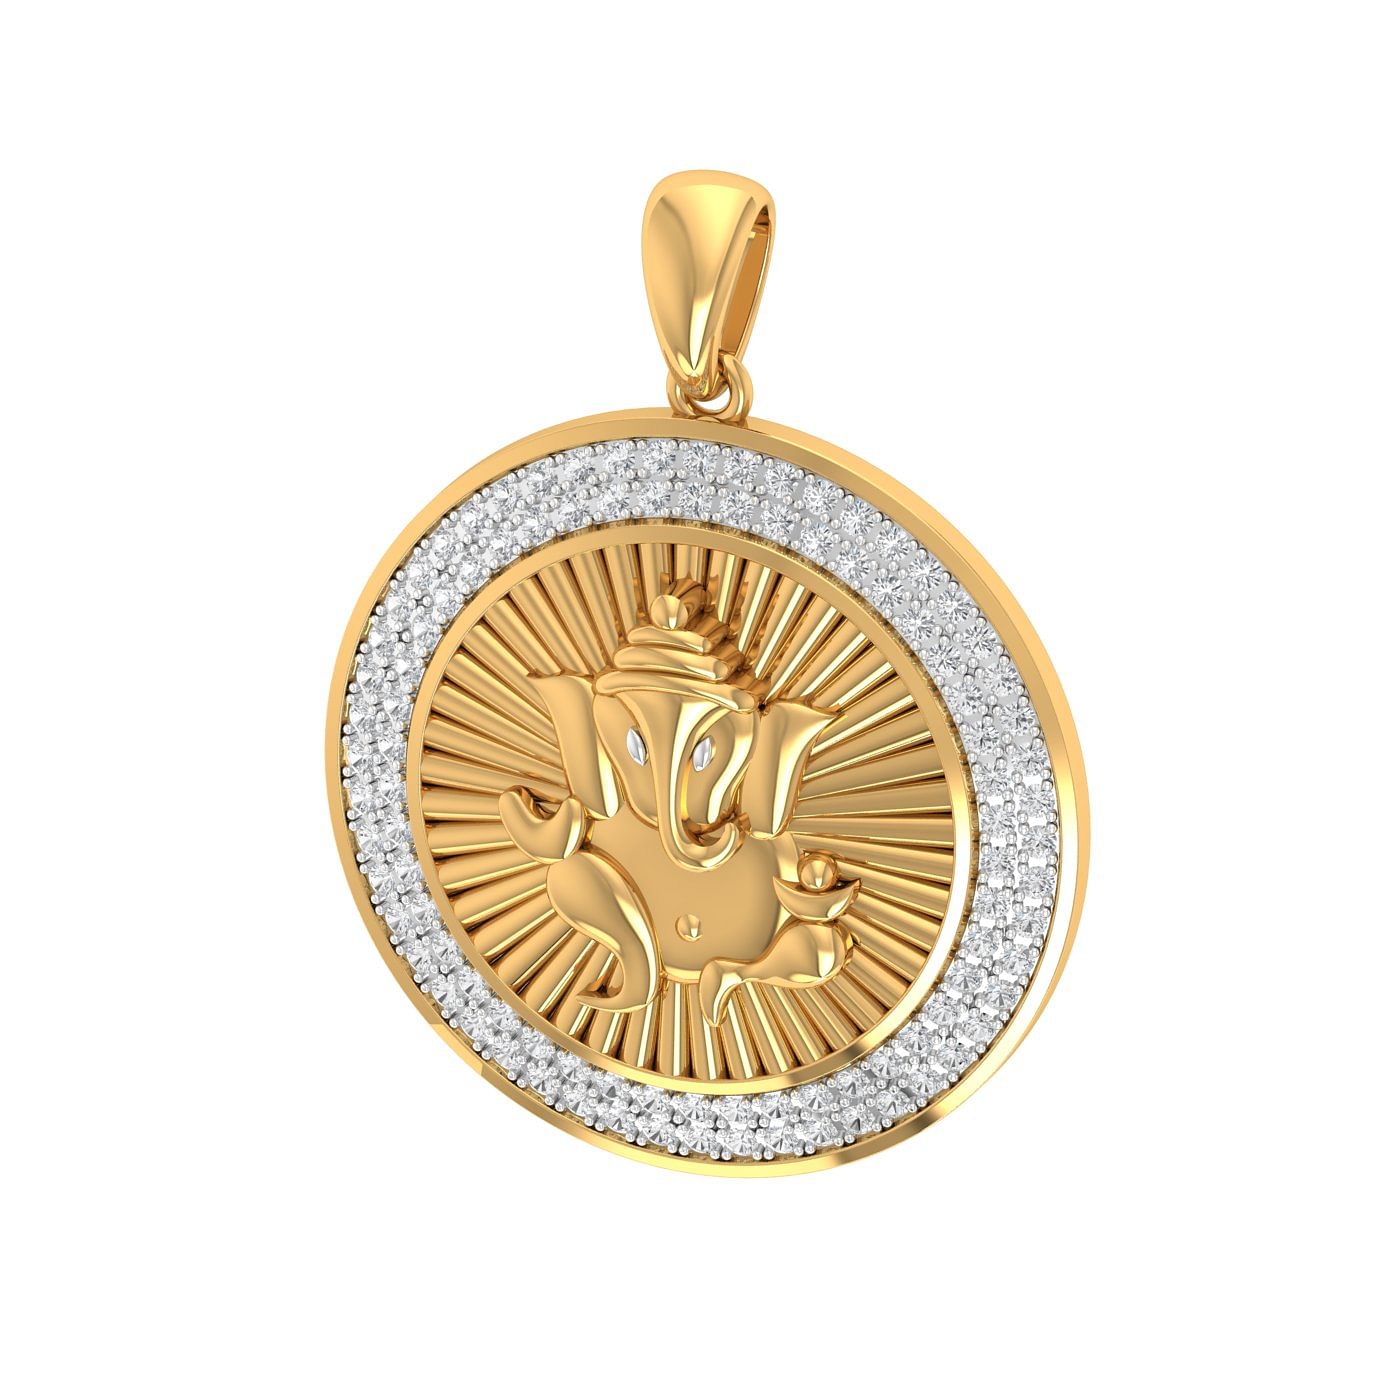 Oval shape ganpati vasana diamond pendant